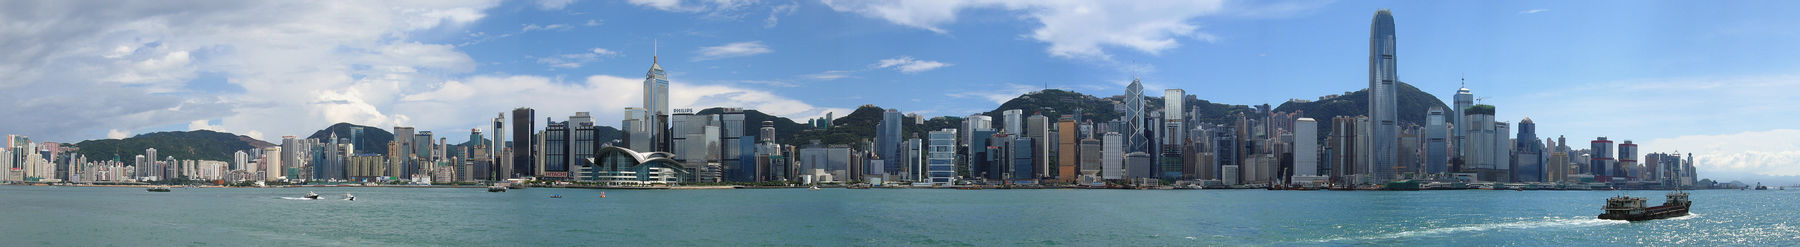 Vista panorámica de Hong Kong desde la bahía.